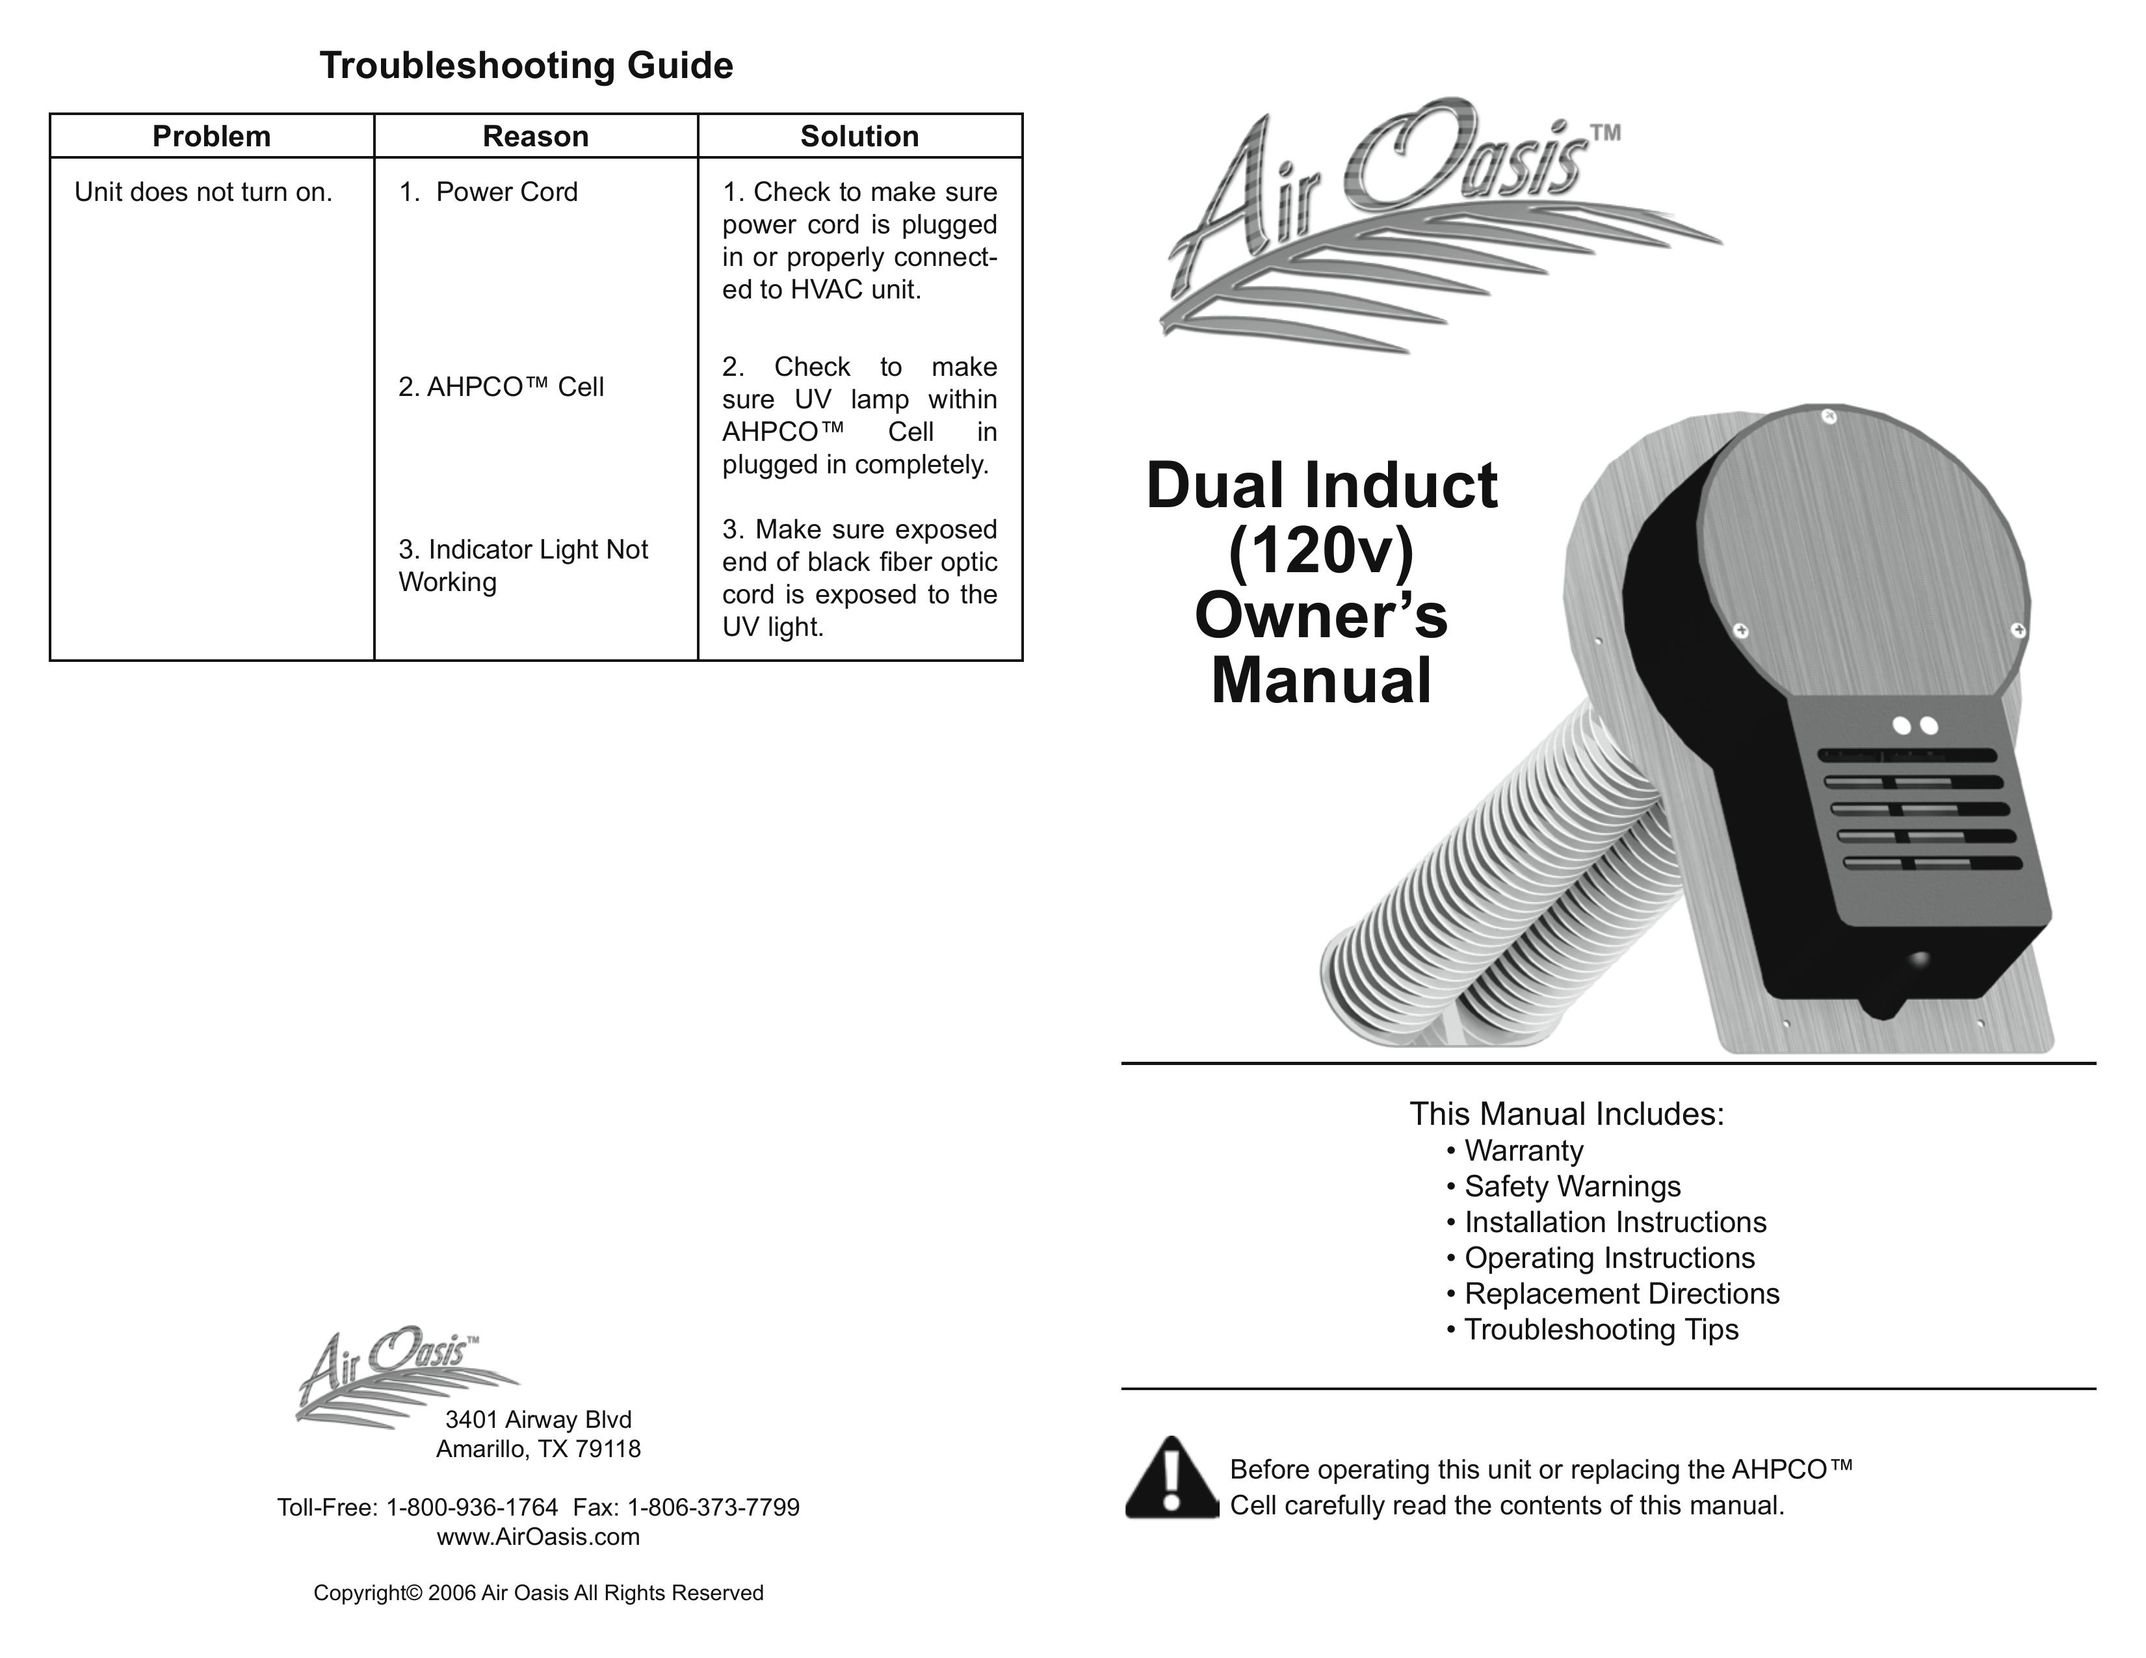 Air Oasis Dual Induct (120v) Air Cleaner User Manual